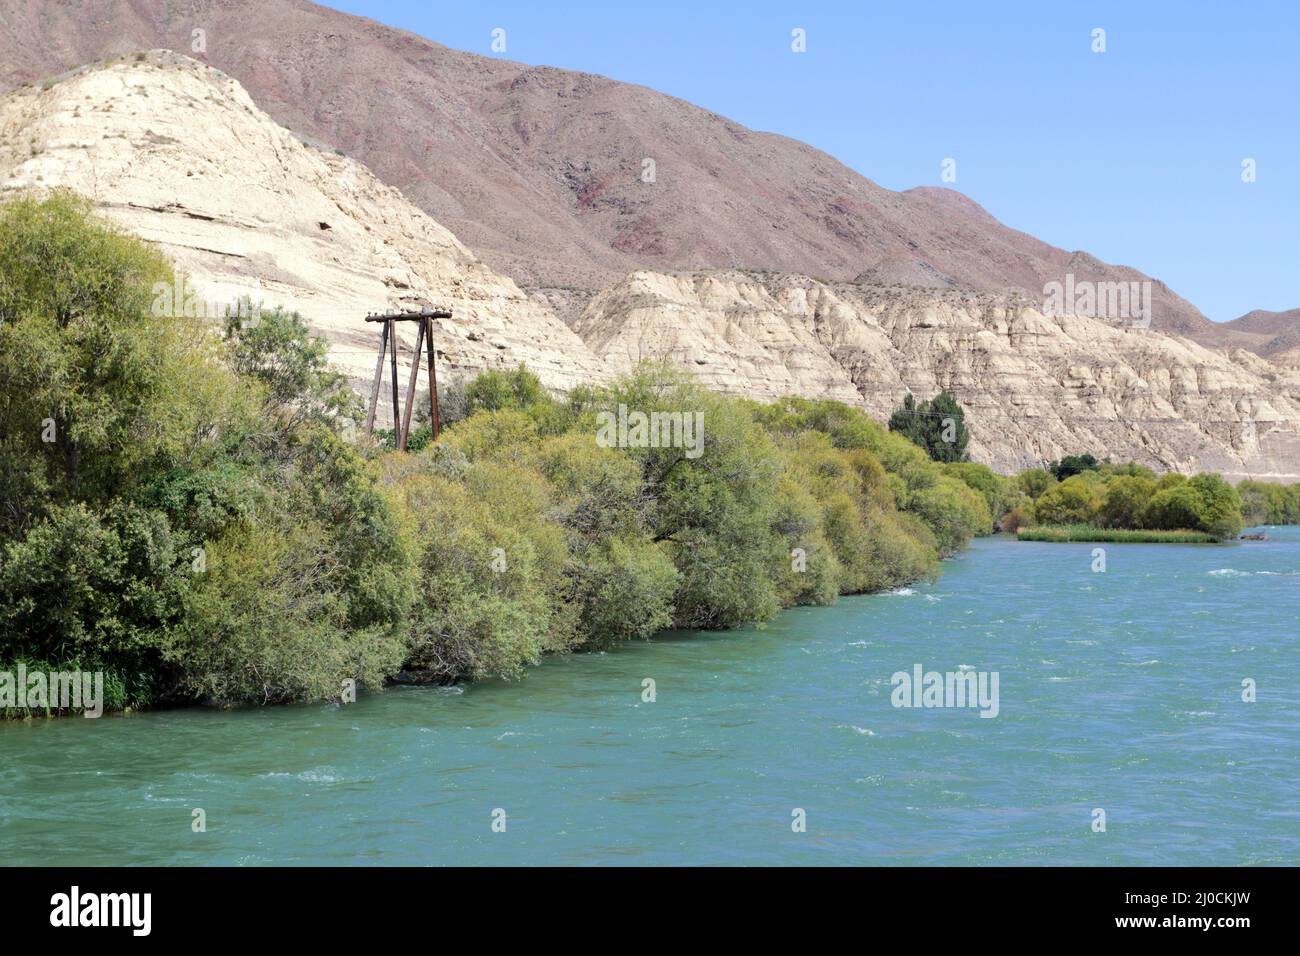 Río Chuy (TschÃ¼i) en Tokmak, Kirguistán Foto de stock